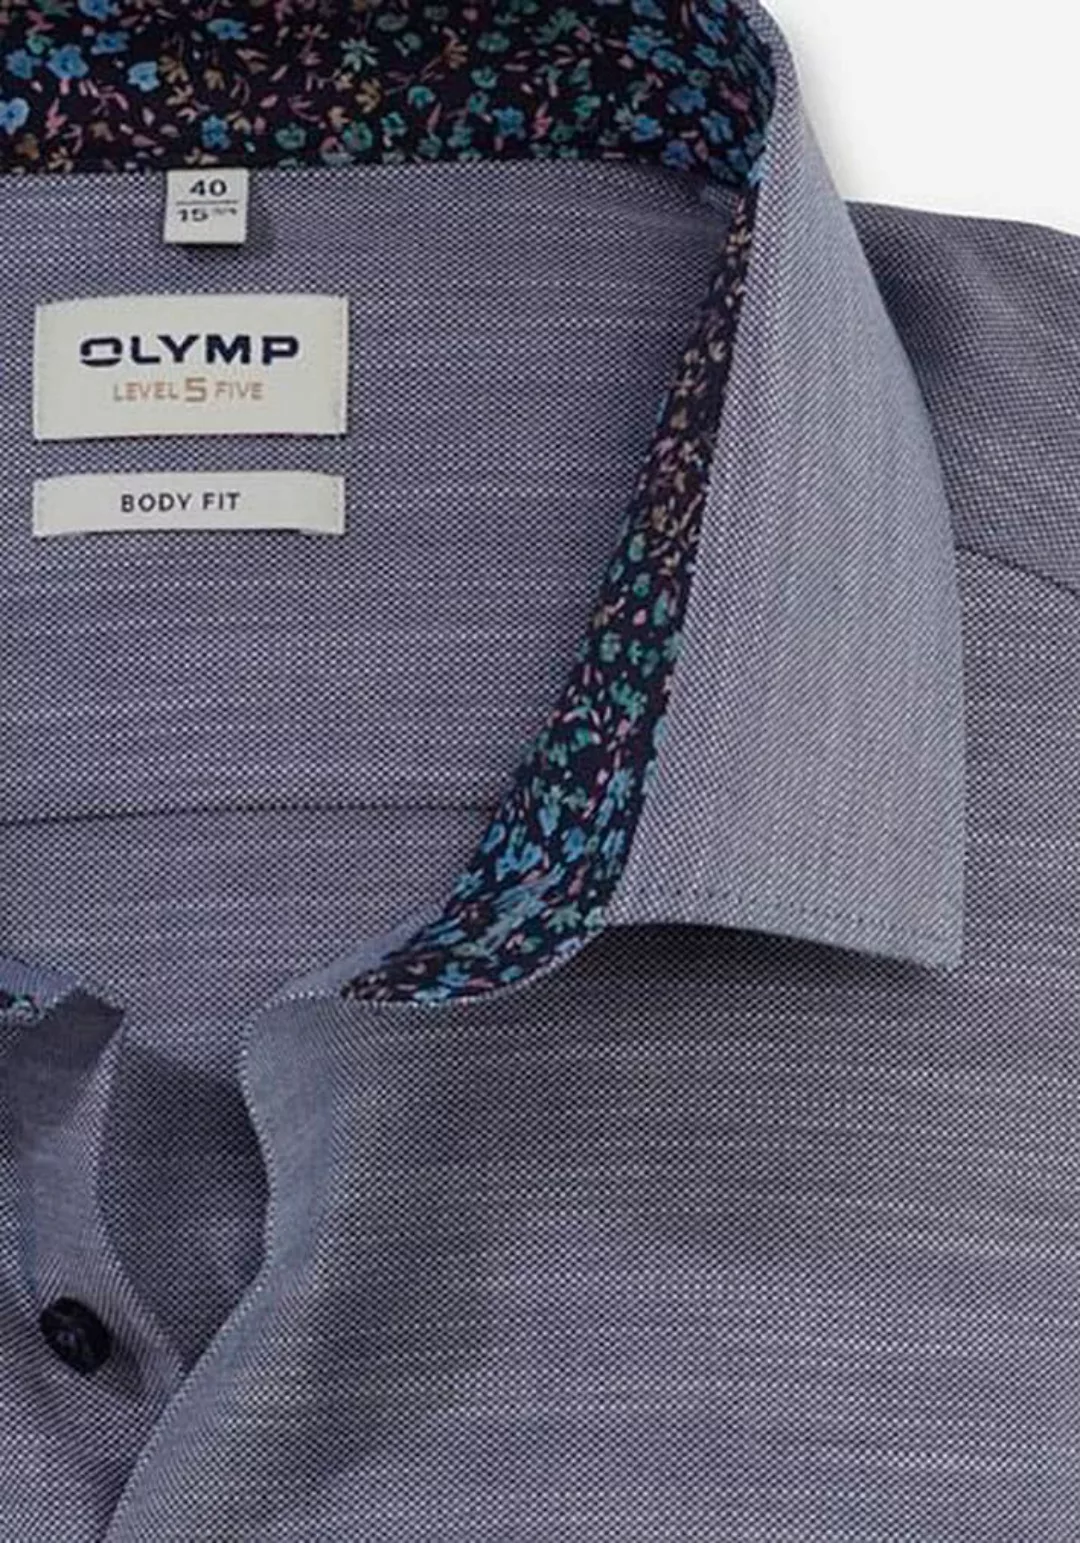 OLYMP Businesshemd - Hemd - Businesshemd - Level Five - body fit - Modern K günstig online kaufen